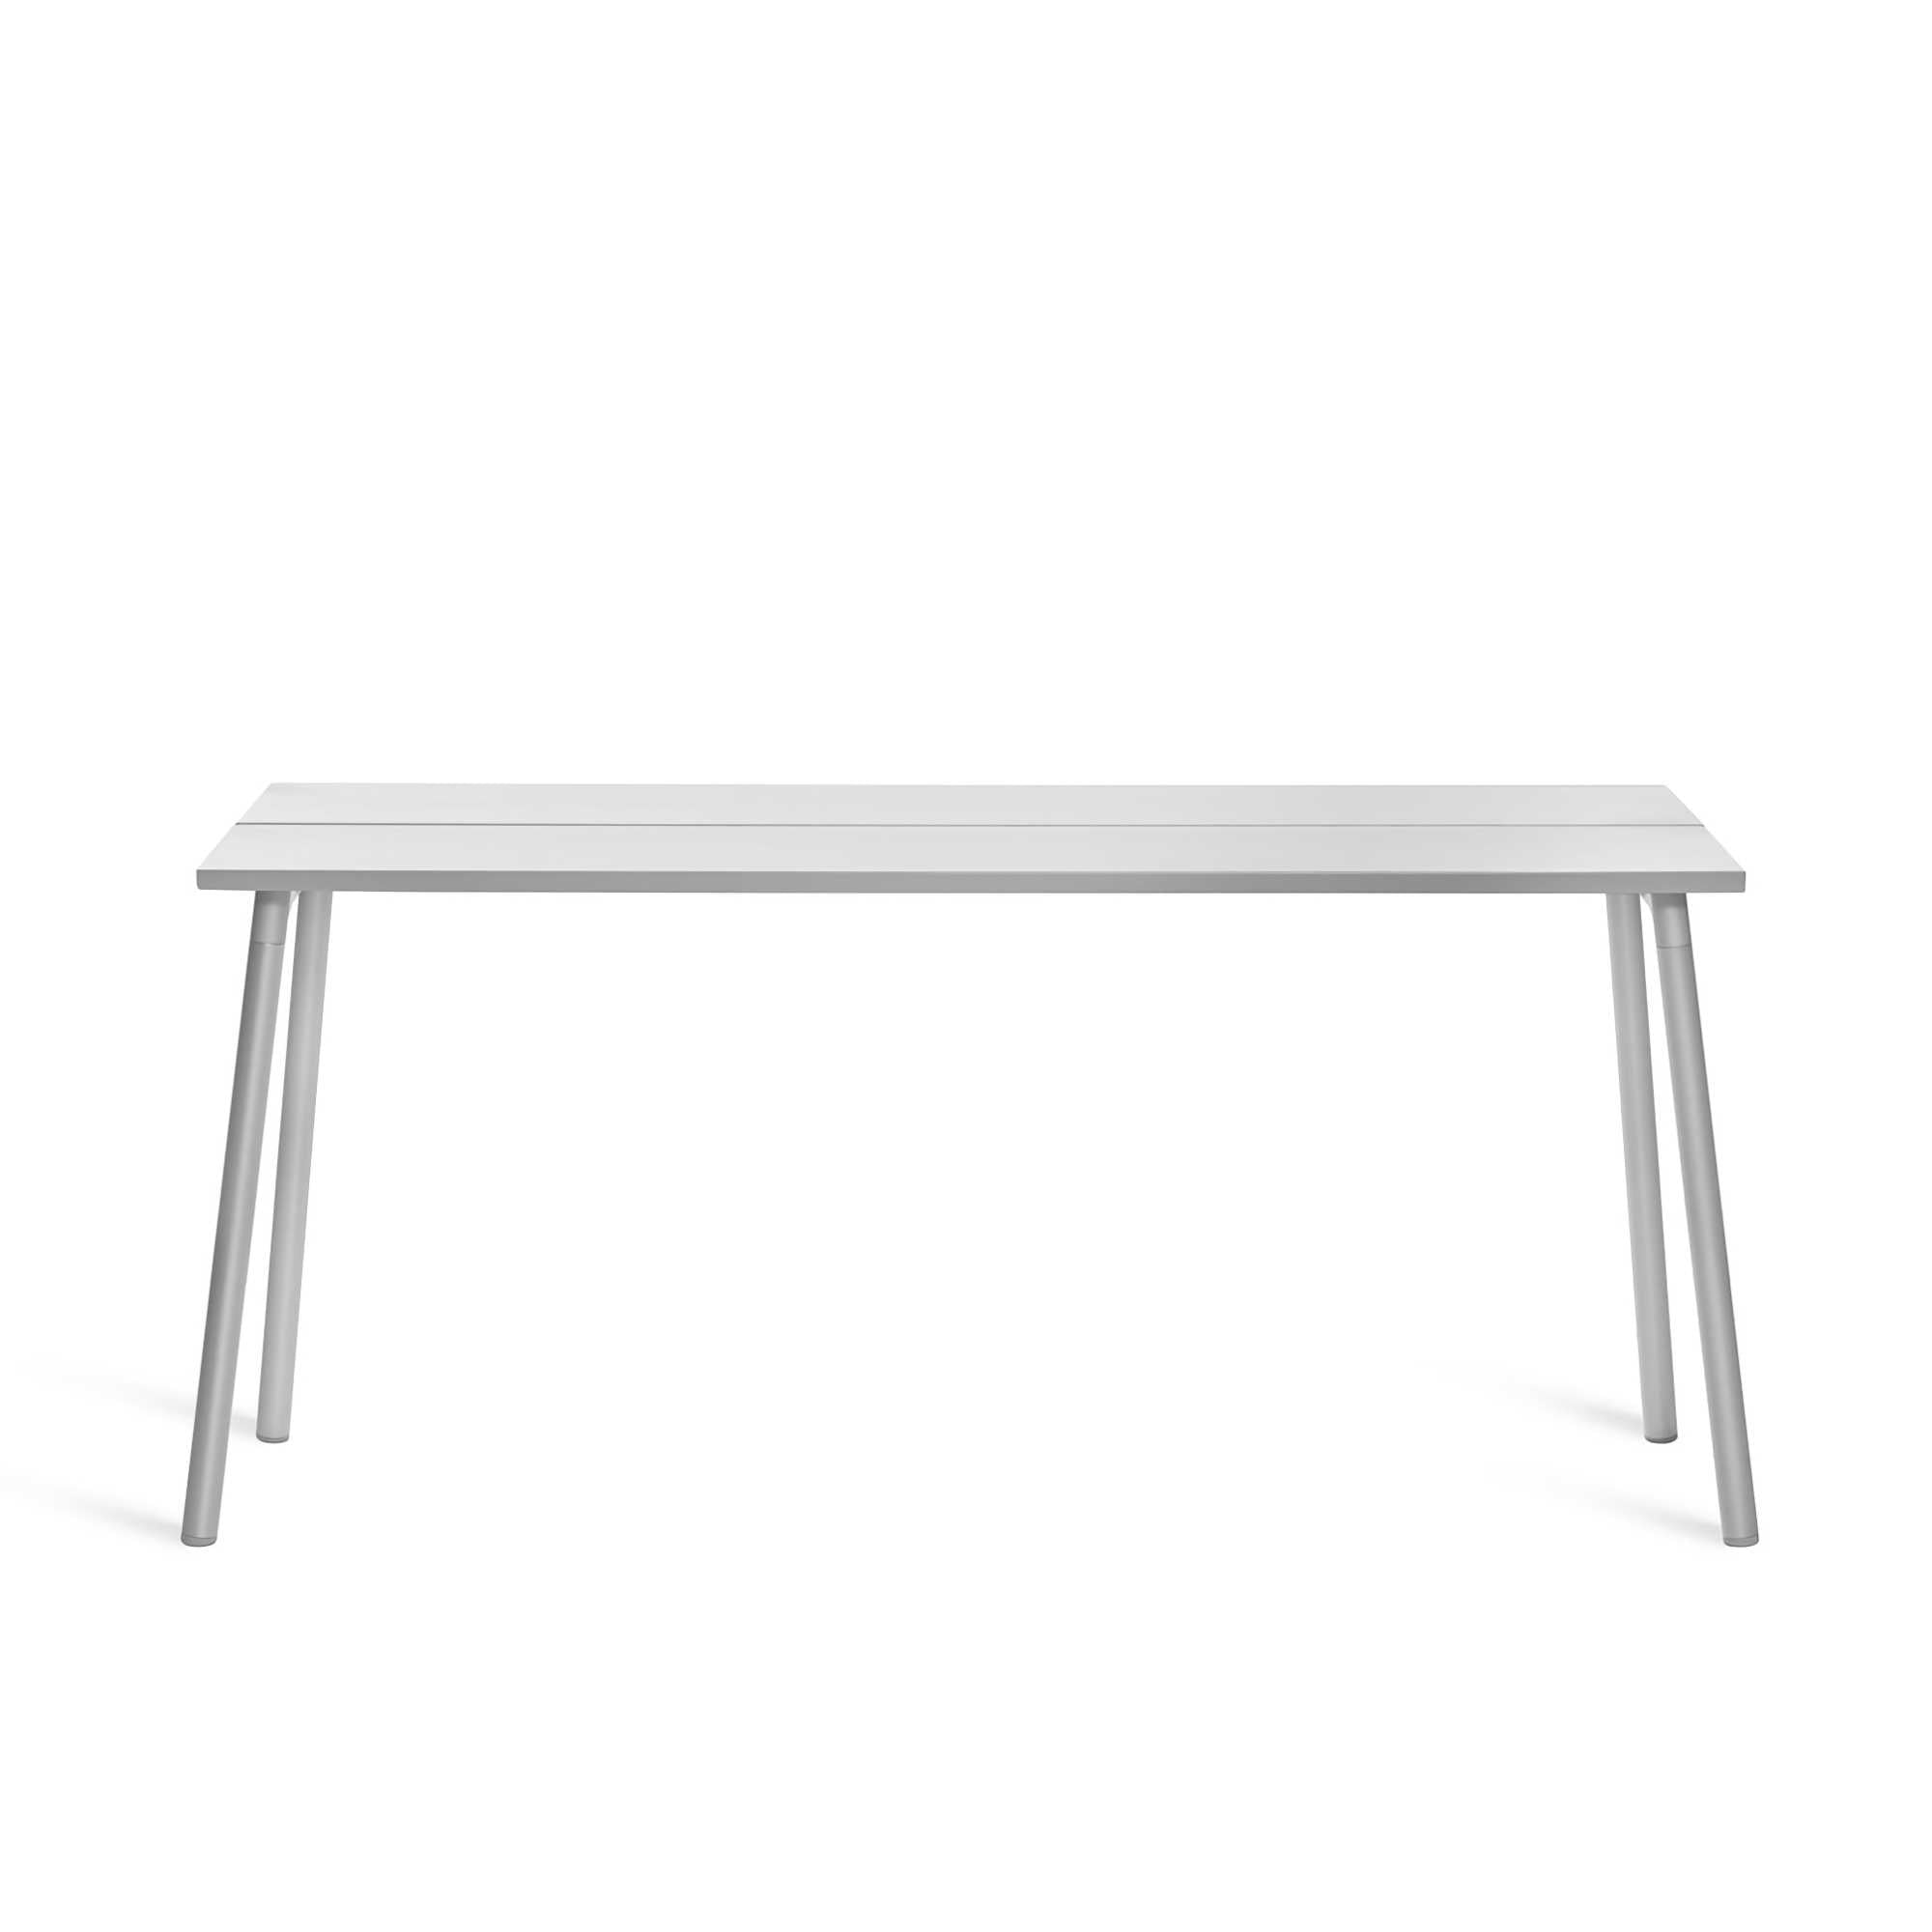 Emeco Run Side Table 161cm, aluminum (outdoor)